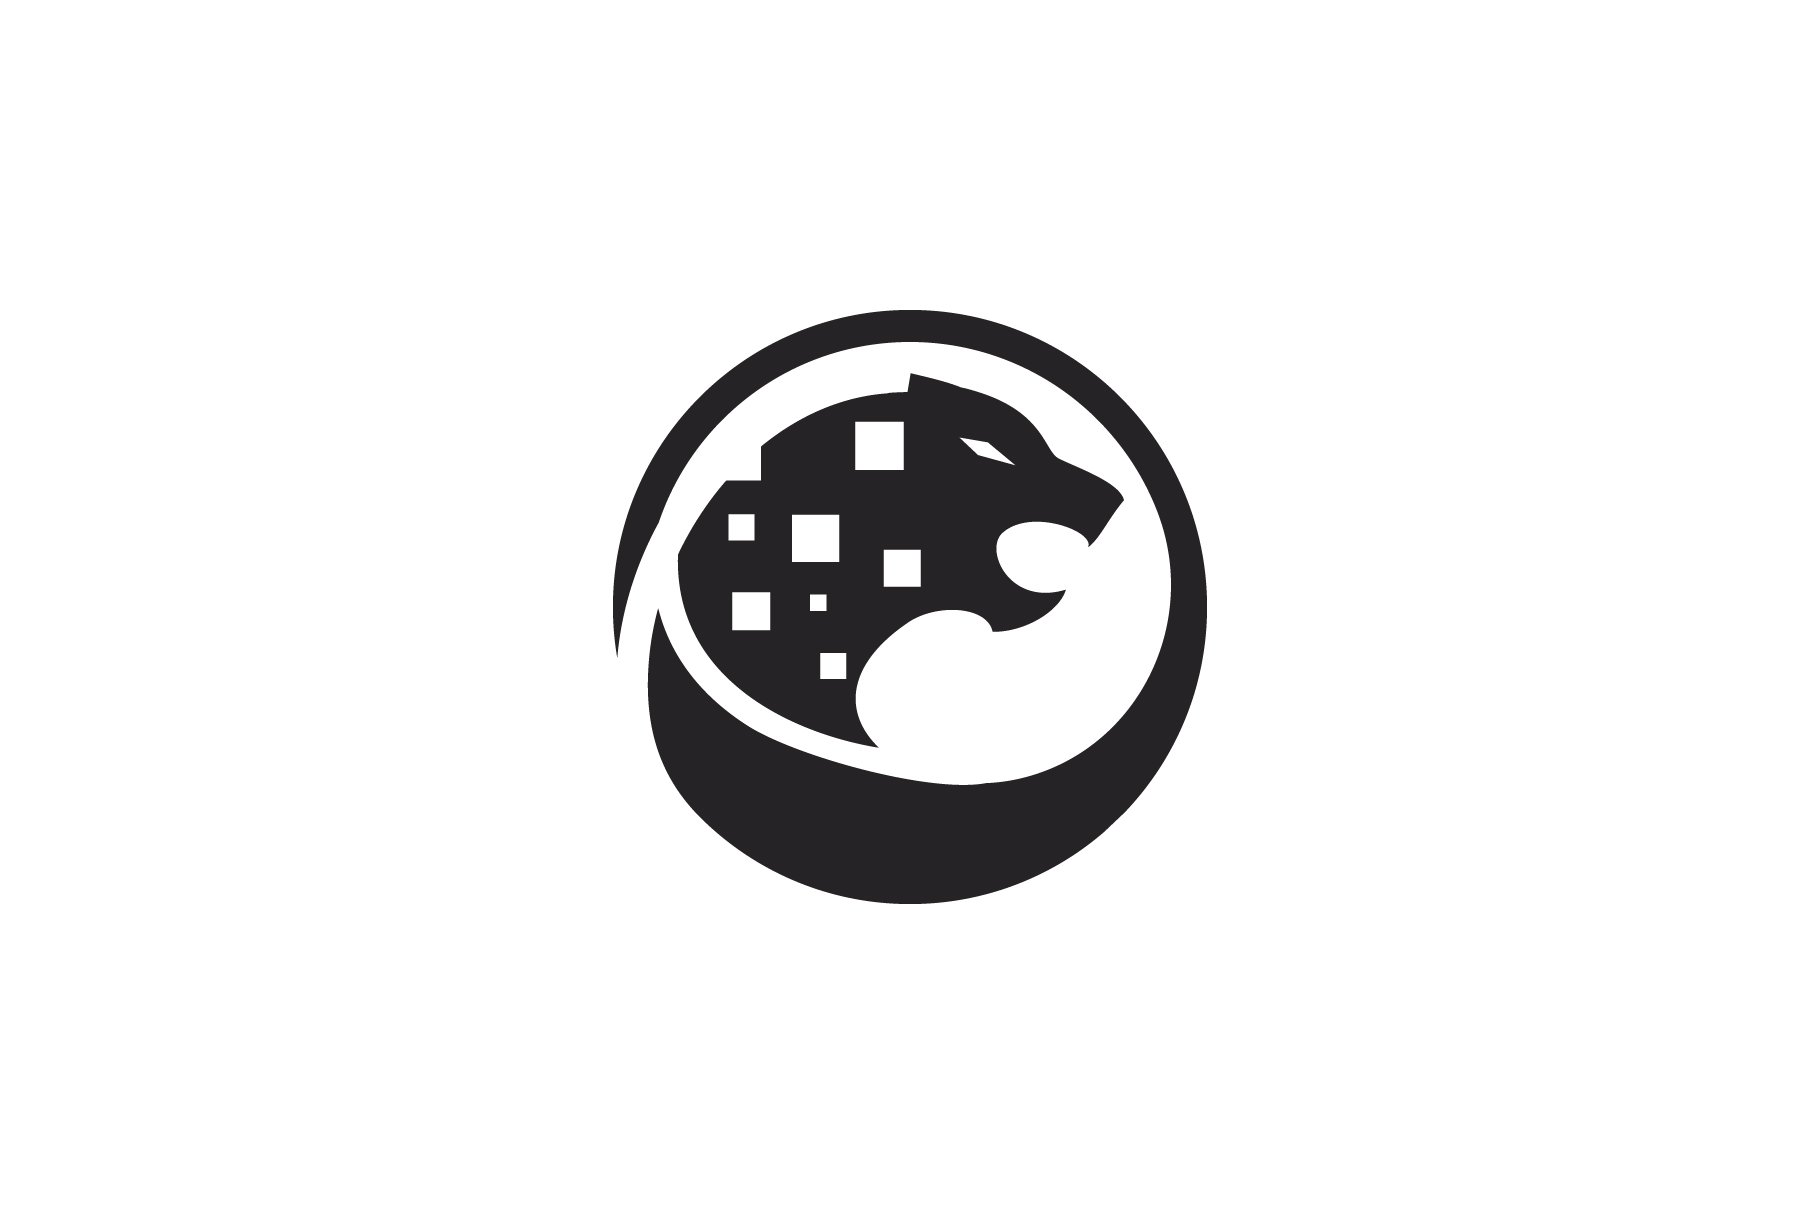 leopard solution logo cover image.